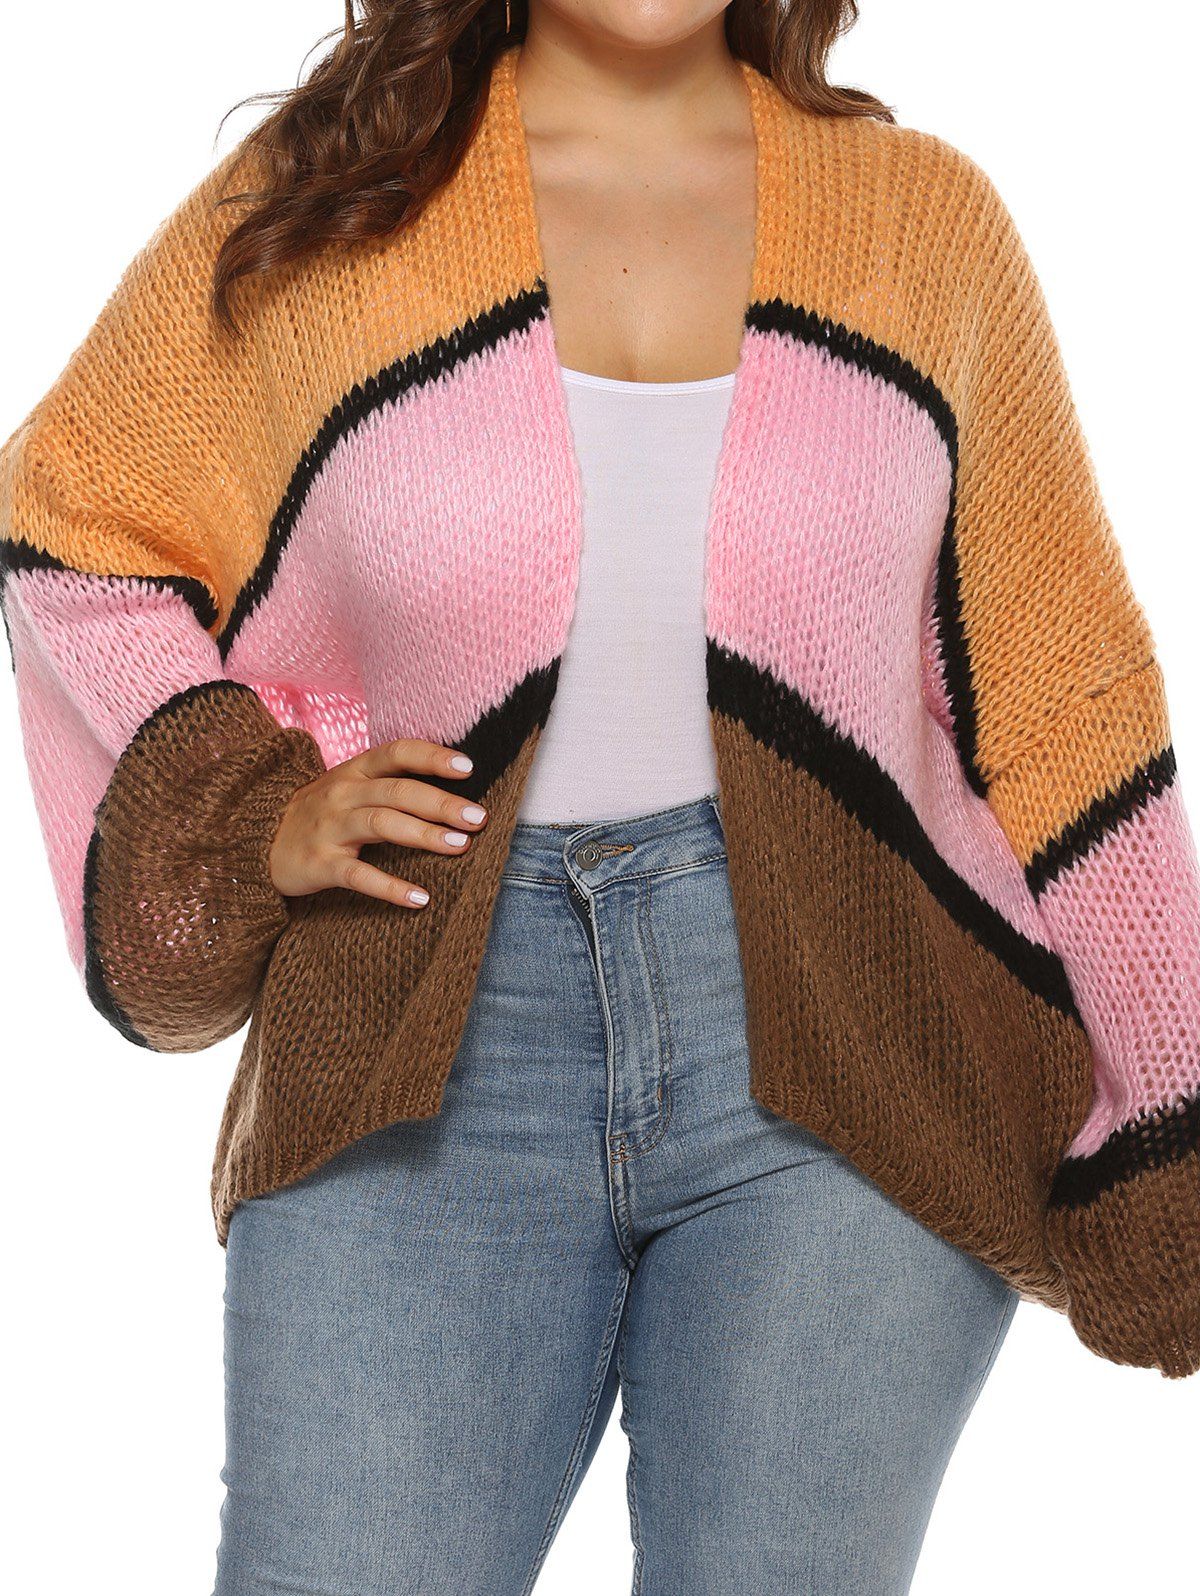 Plus Size Crochet Cardigan Contrast Colorblock Open Front Drop Shoulder Long Sleeve Cardigan - multicolor 3XL